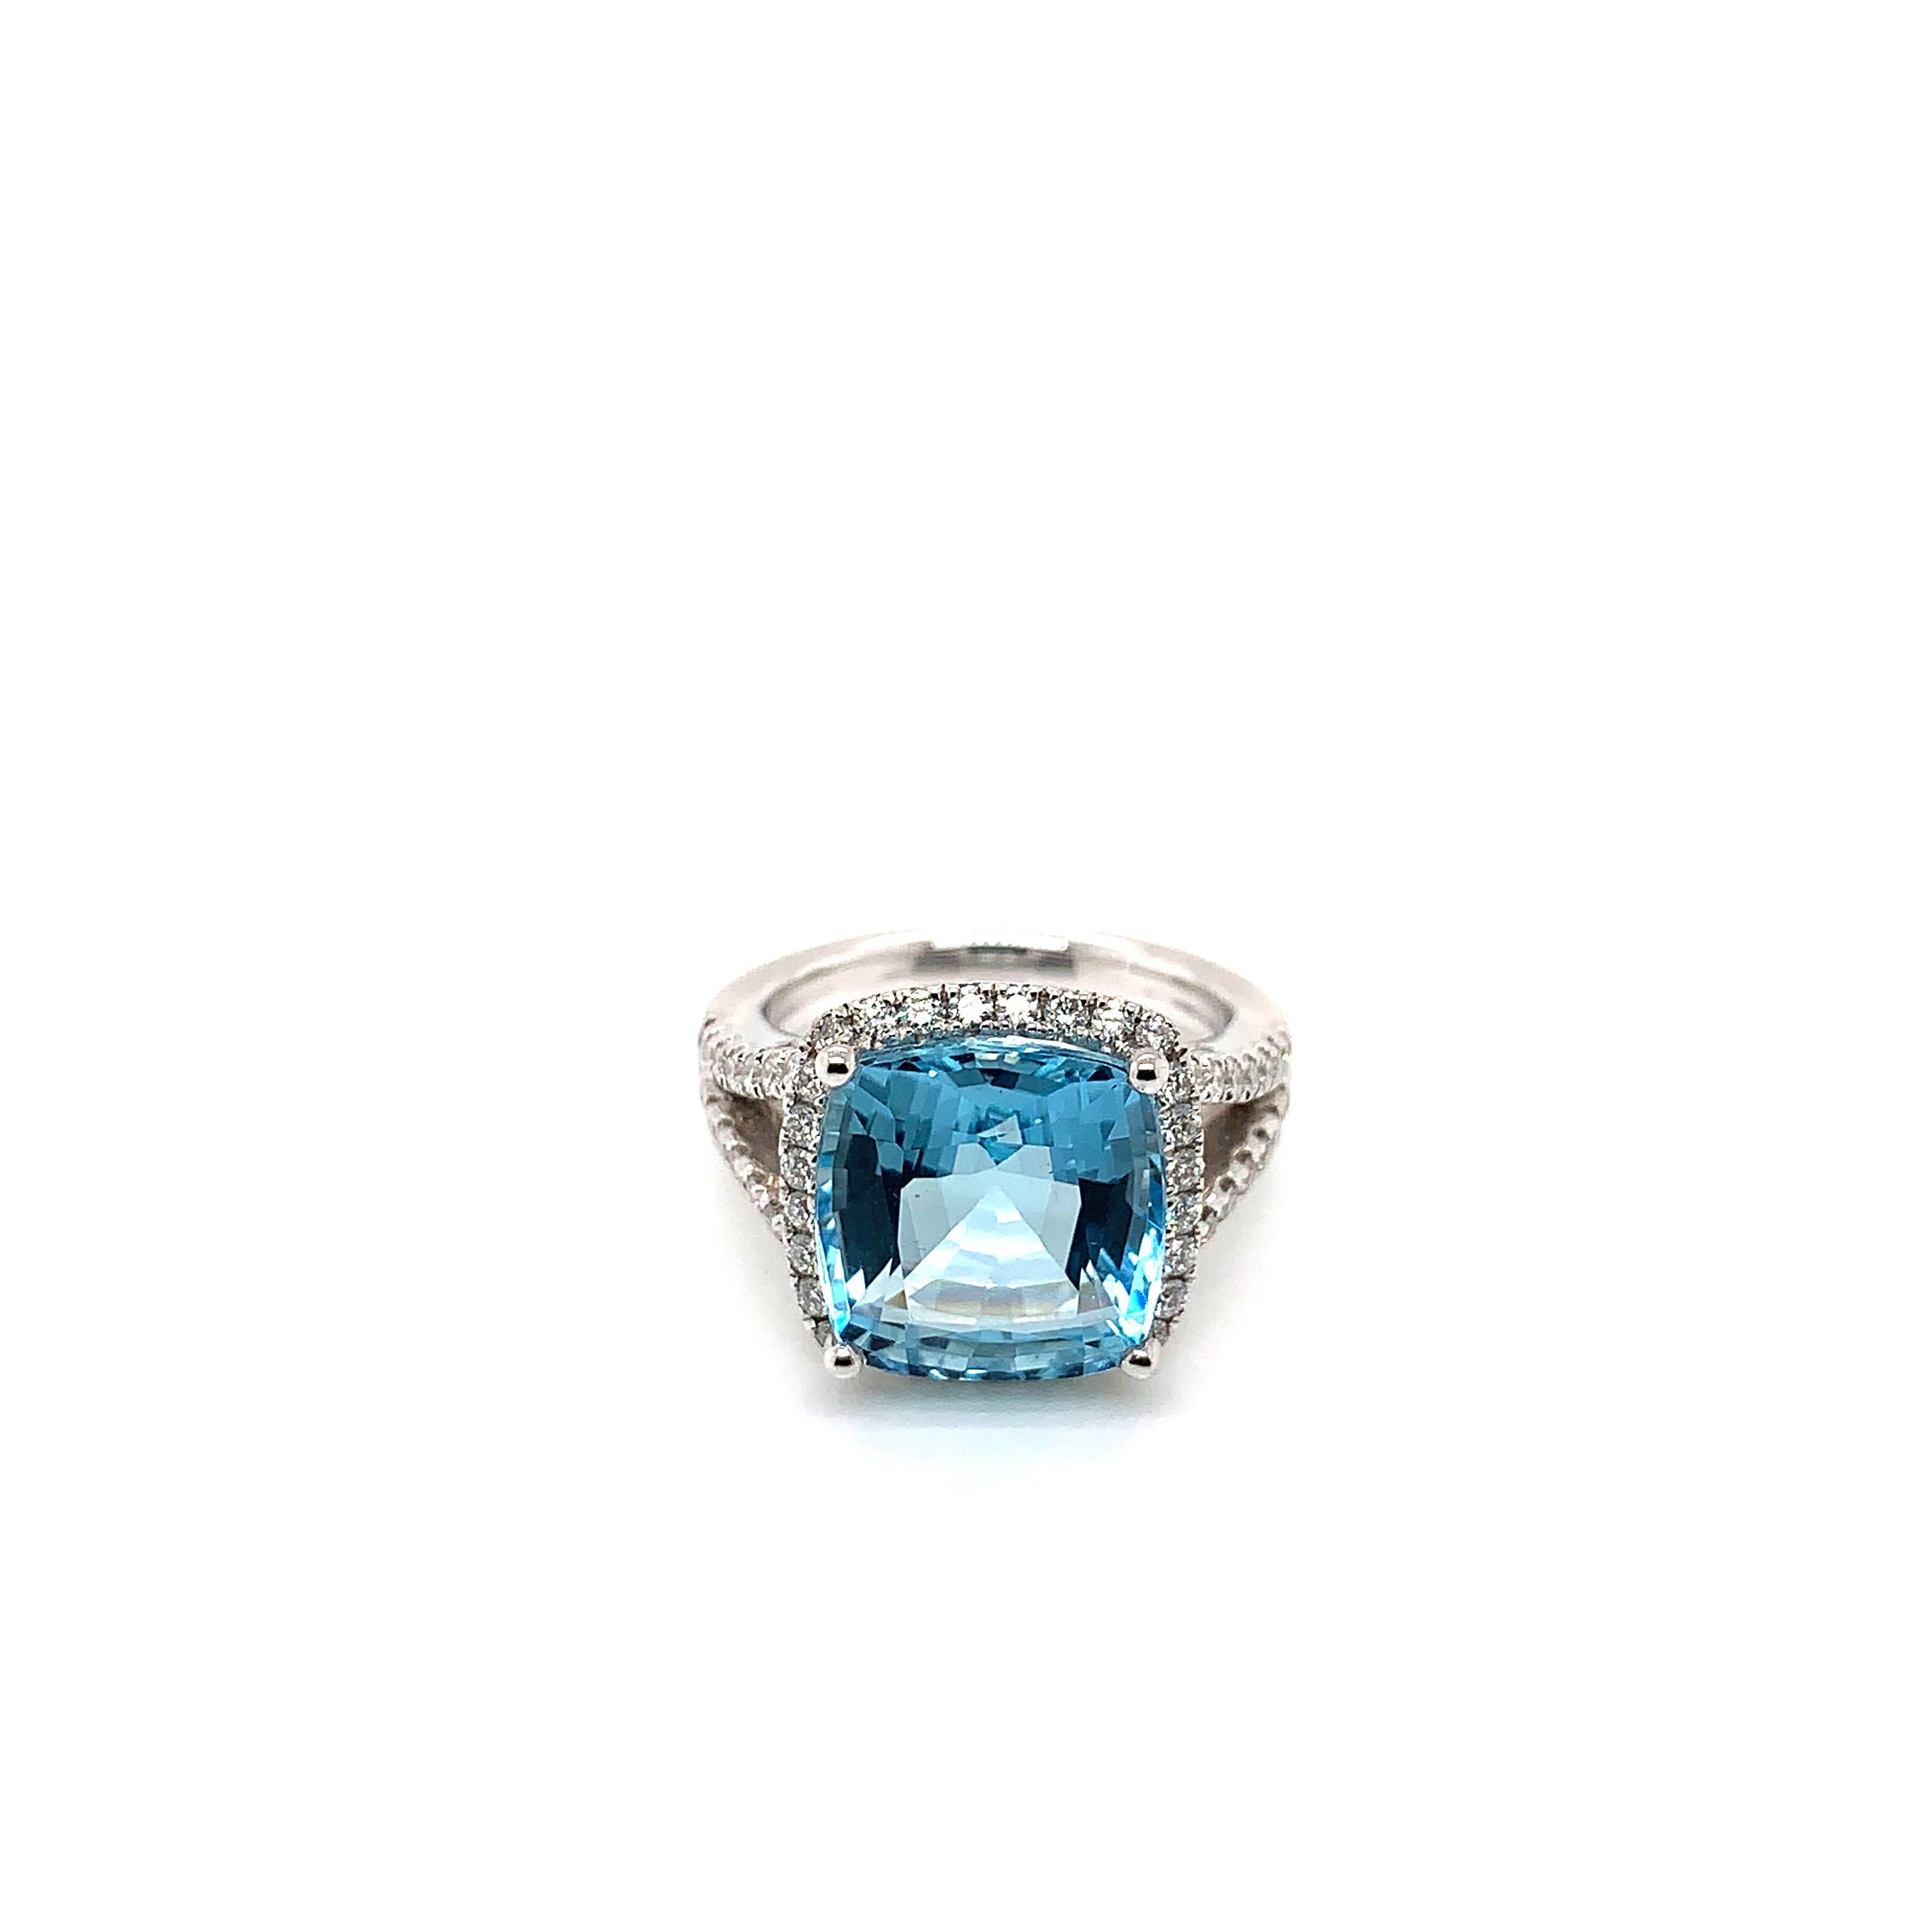 Classic aquamarine ring in 18K white gold with diamonds. 

Aquamarine: 7.16 carat cushion shape.
Diamonds: 0.67 carat, G colour, VS clarity. 
Gold: 11.15g, 18K white gold. 